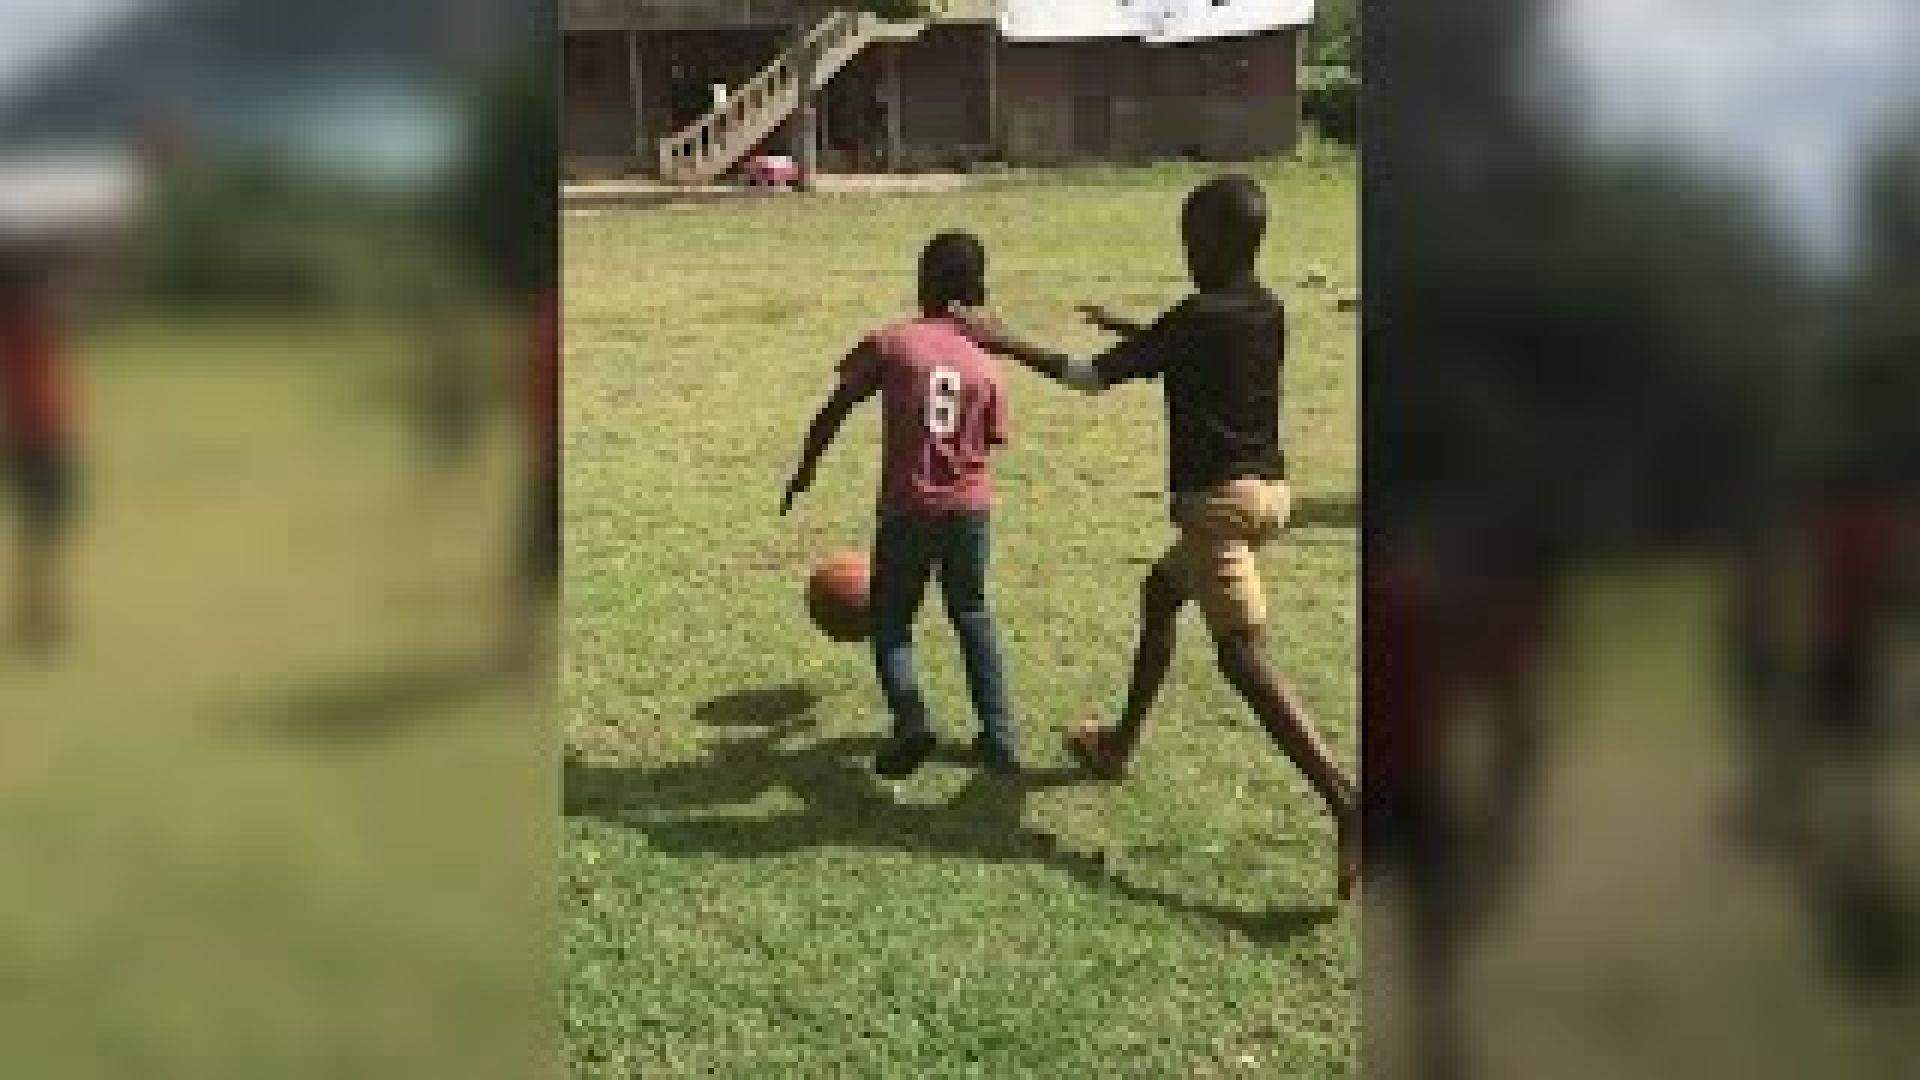 Teaching Basketball in Haiti